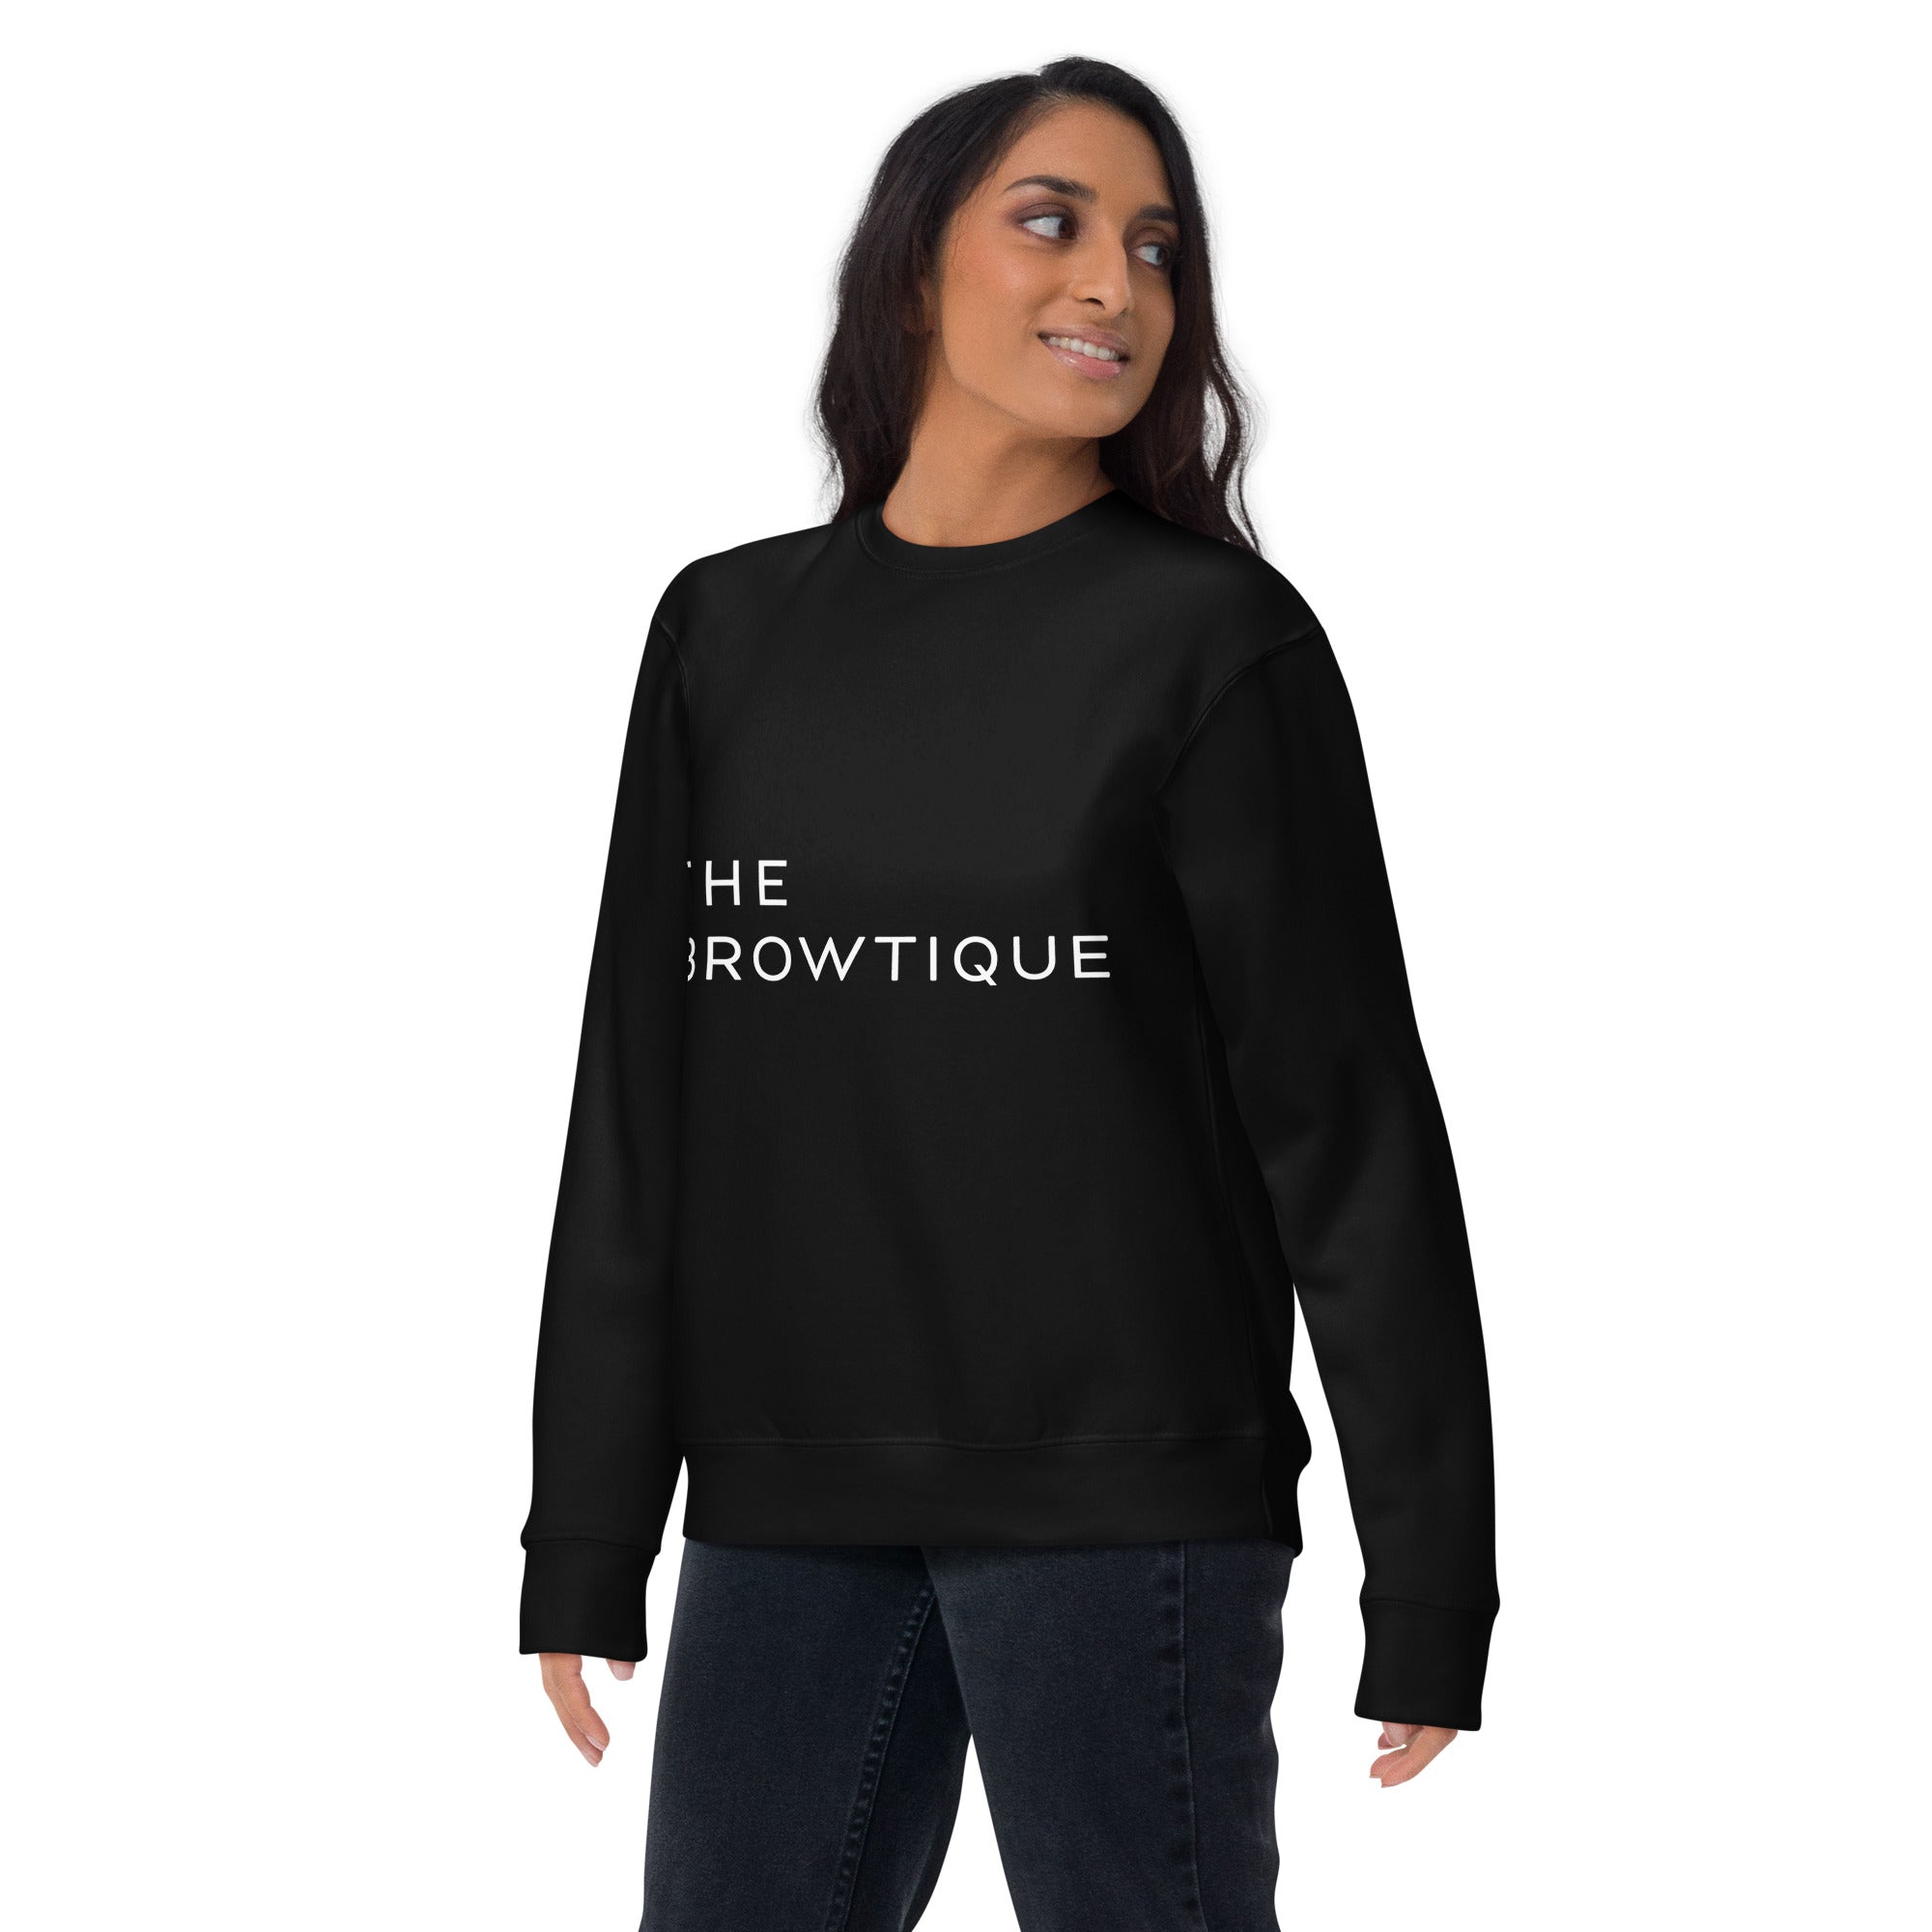 The Browtique Premium Sweatshirt